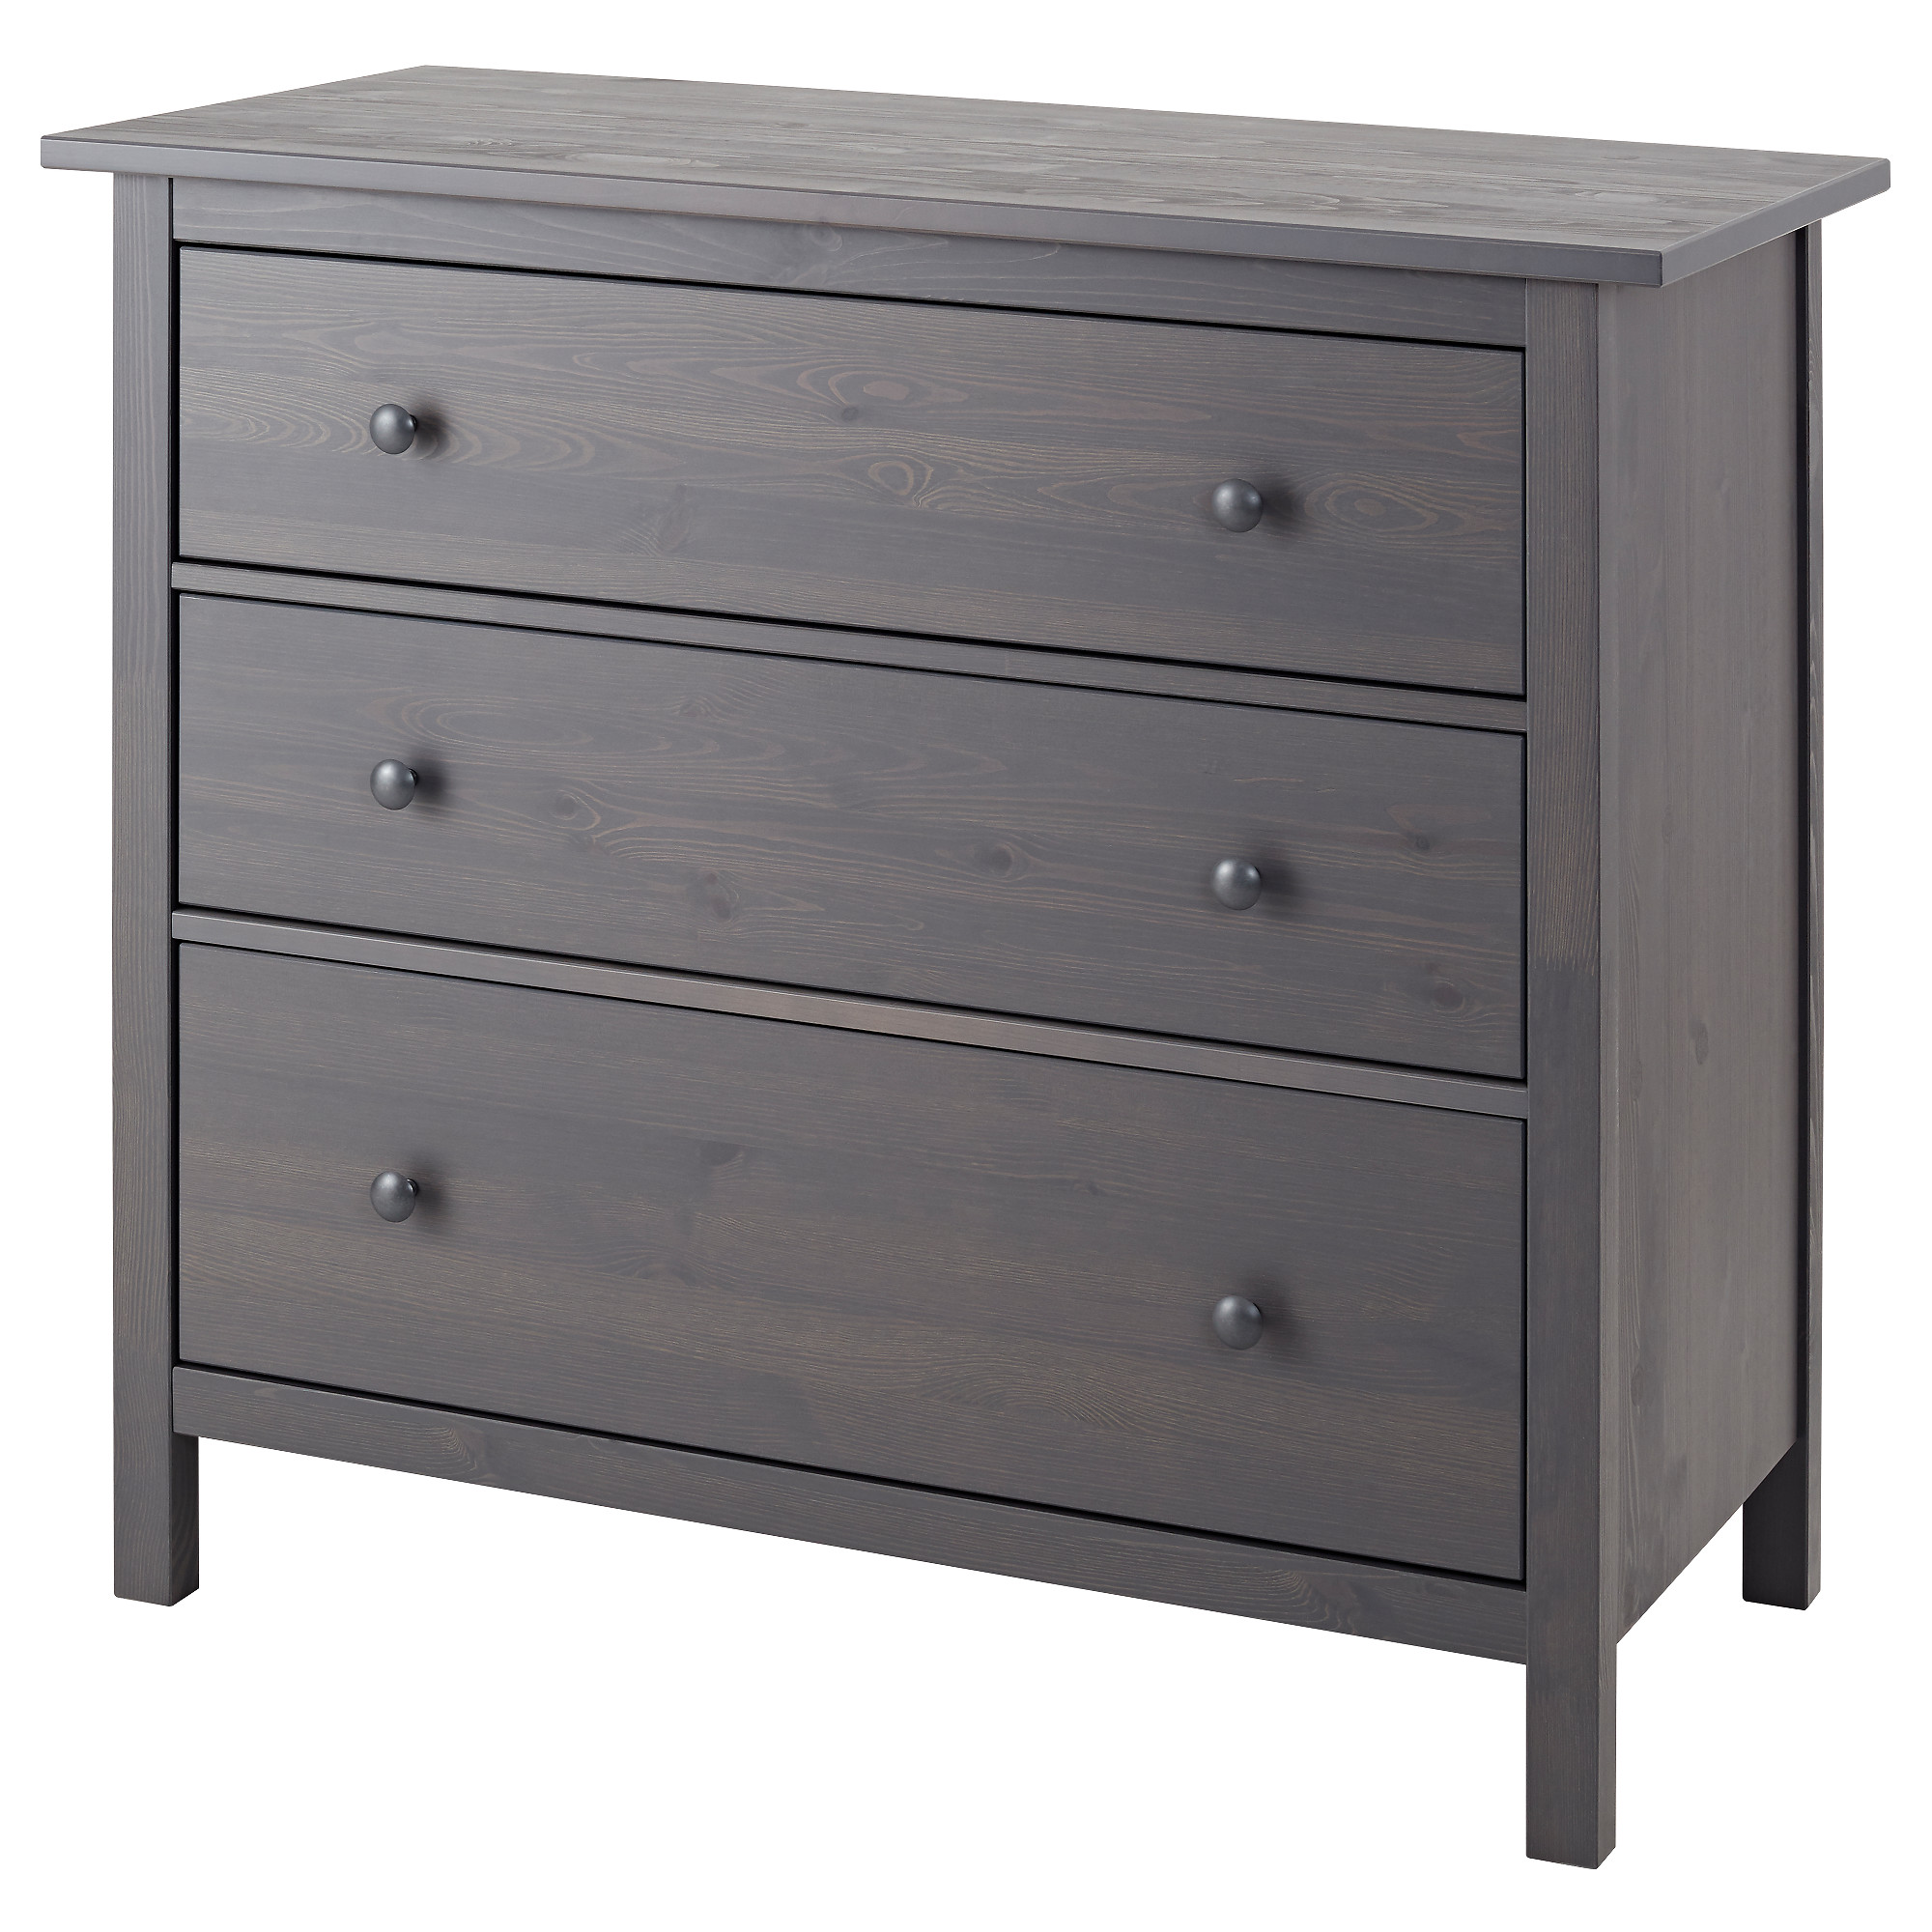 3 Drawer Dressers hemnes 3-drawer chest, dark gray gray stained width: 42 1/2 EOGQCIM